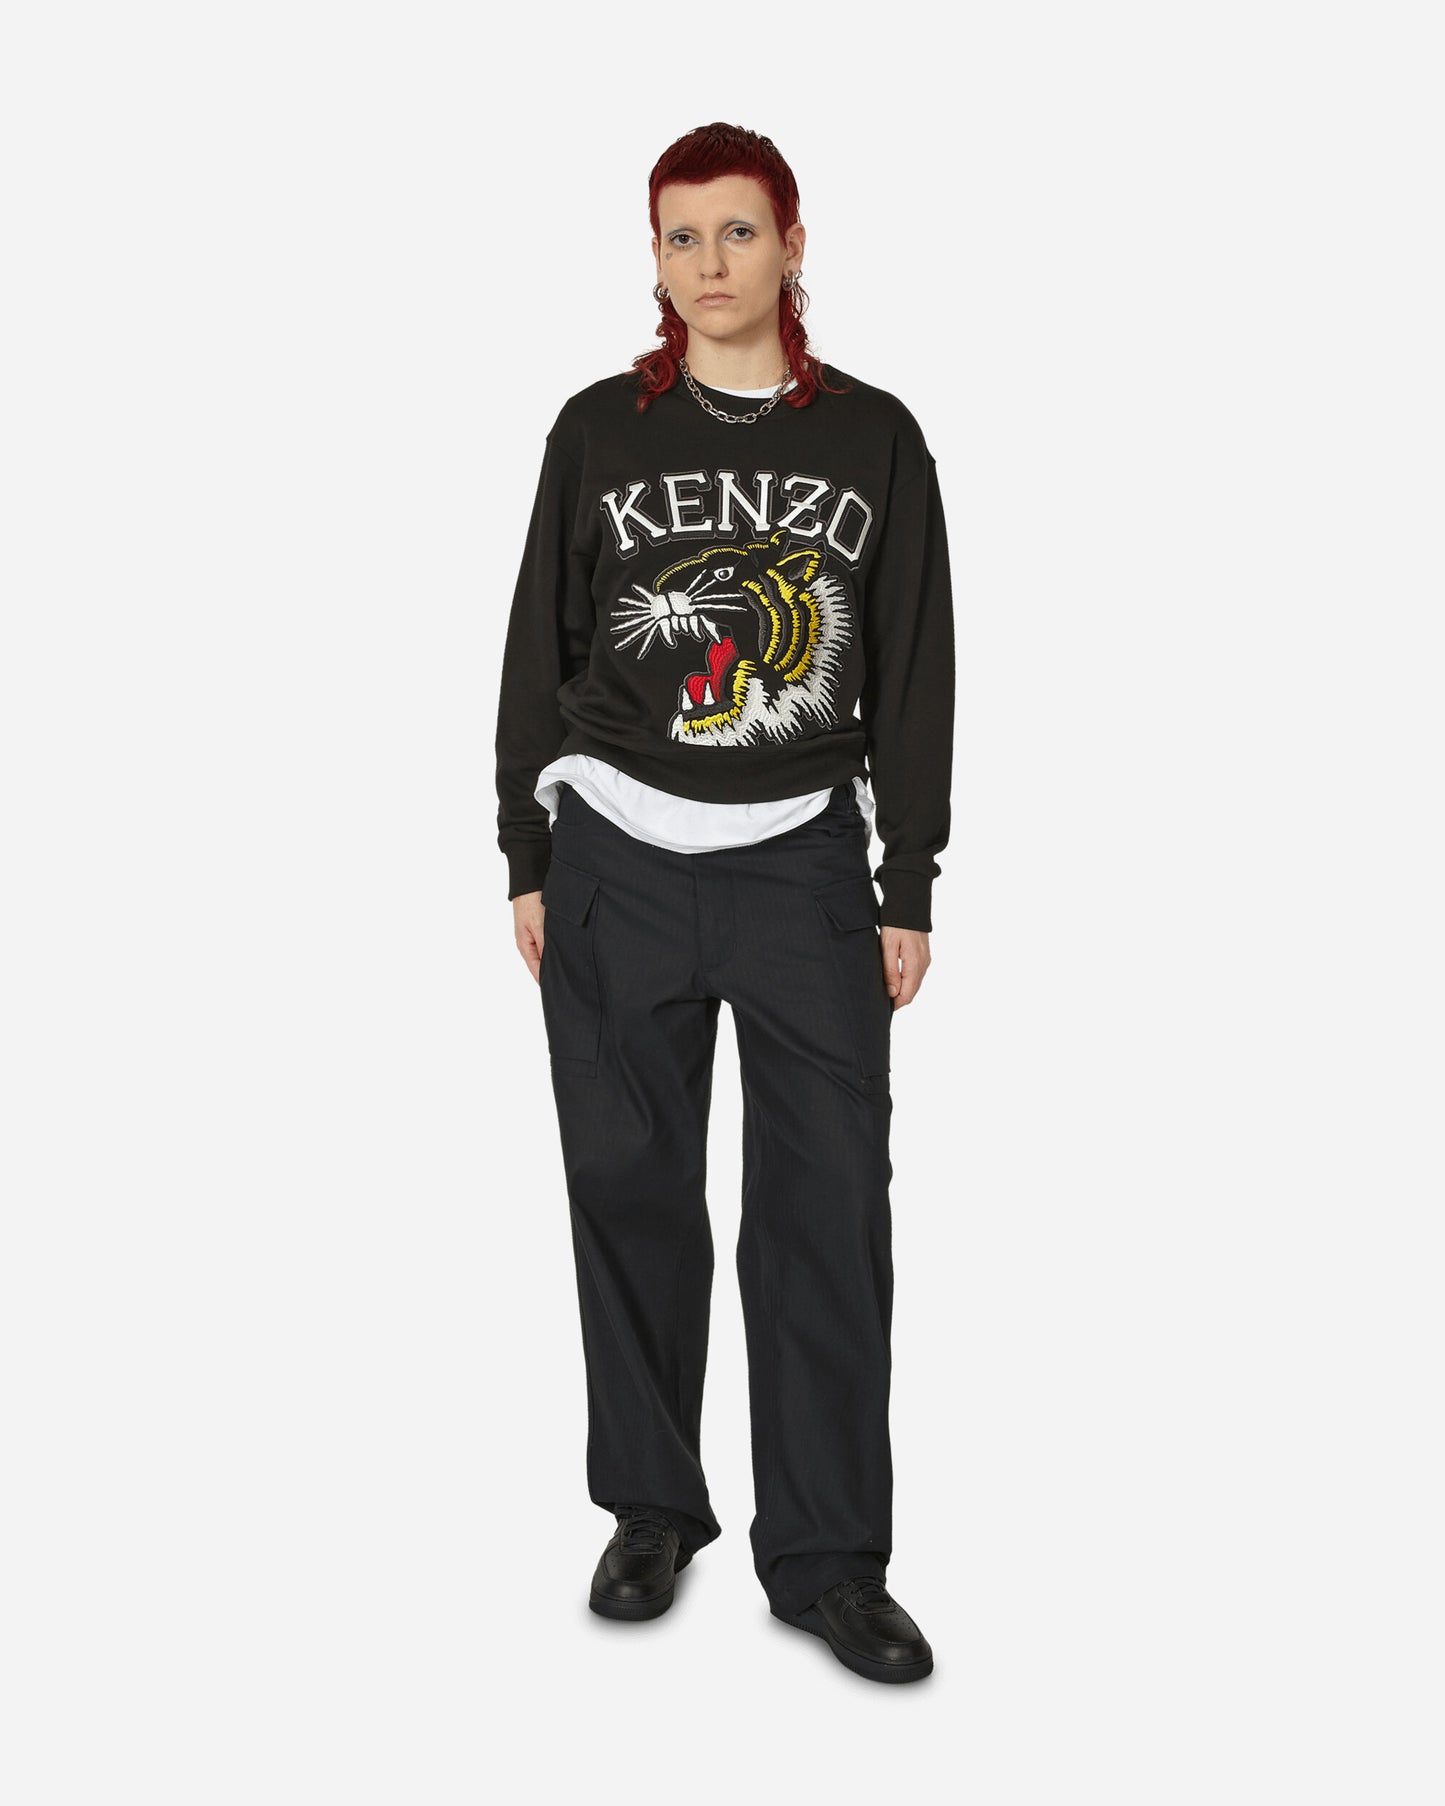 KENZO Paris Tiger Varsity Classic Sweatshirt Black Sweatshirts Crewneck FD65SW0494MF 99J